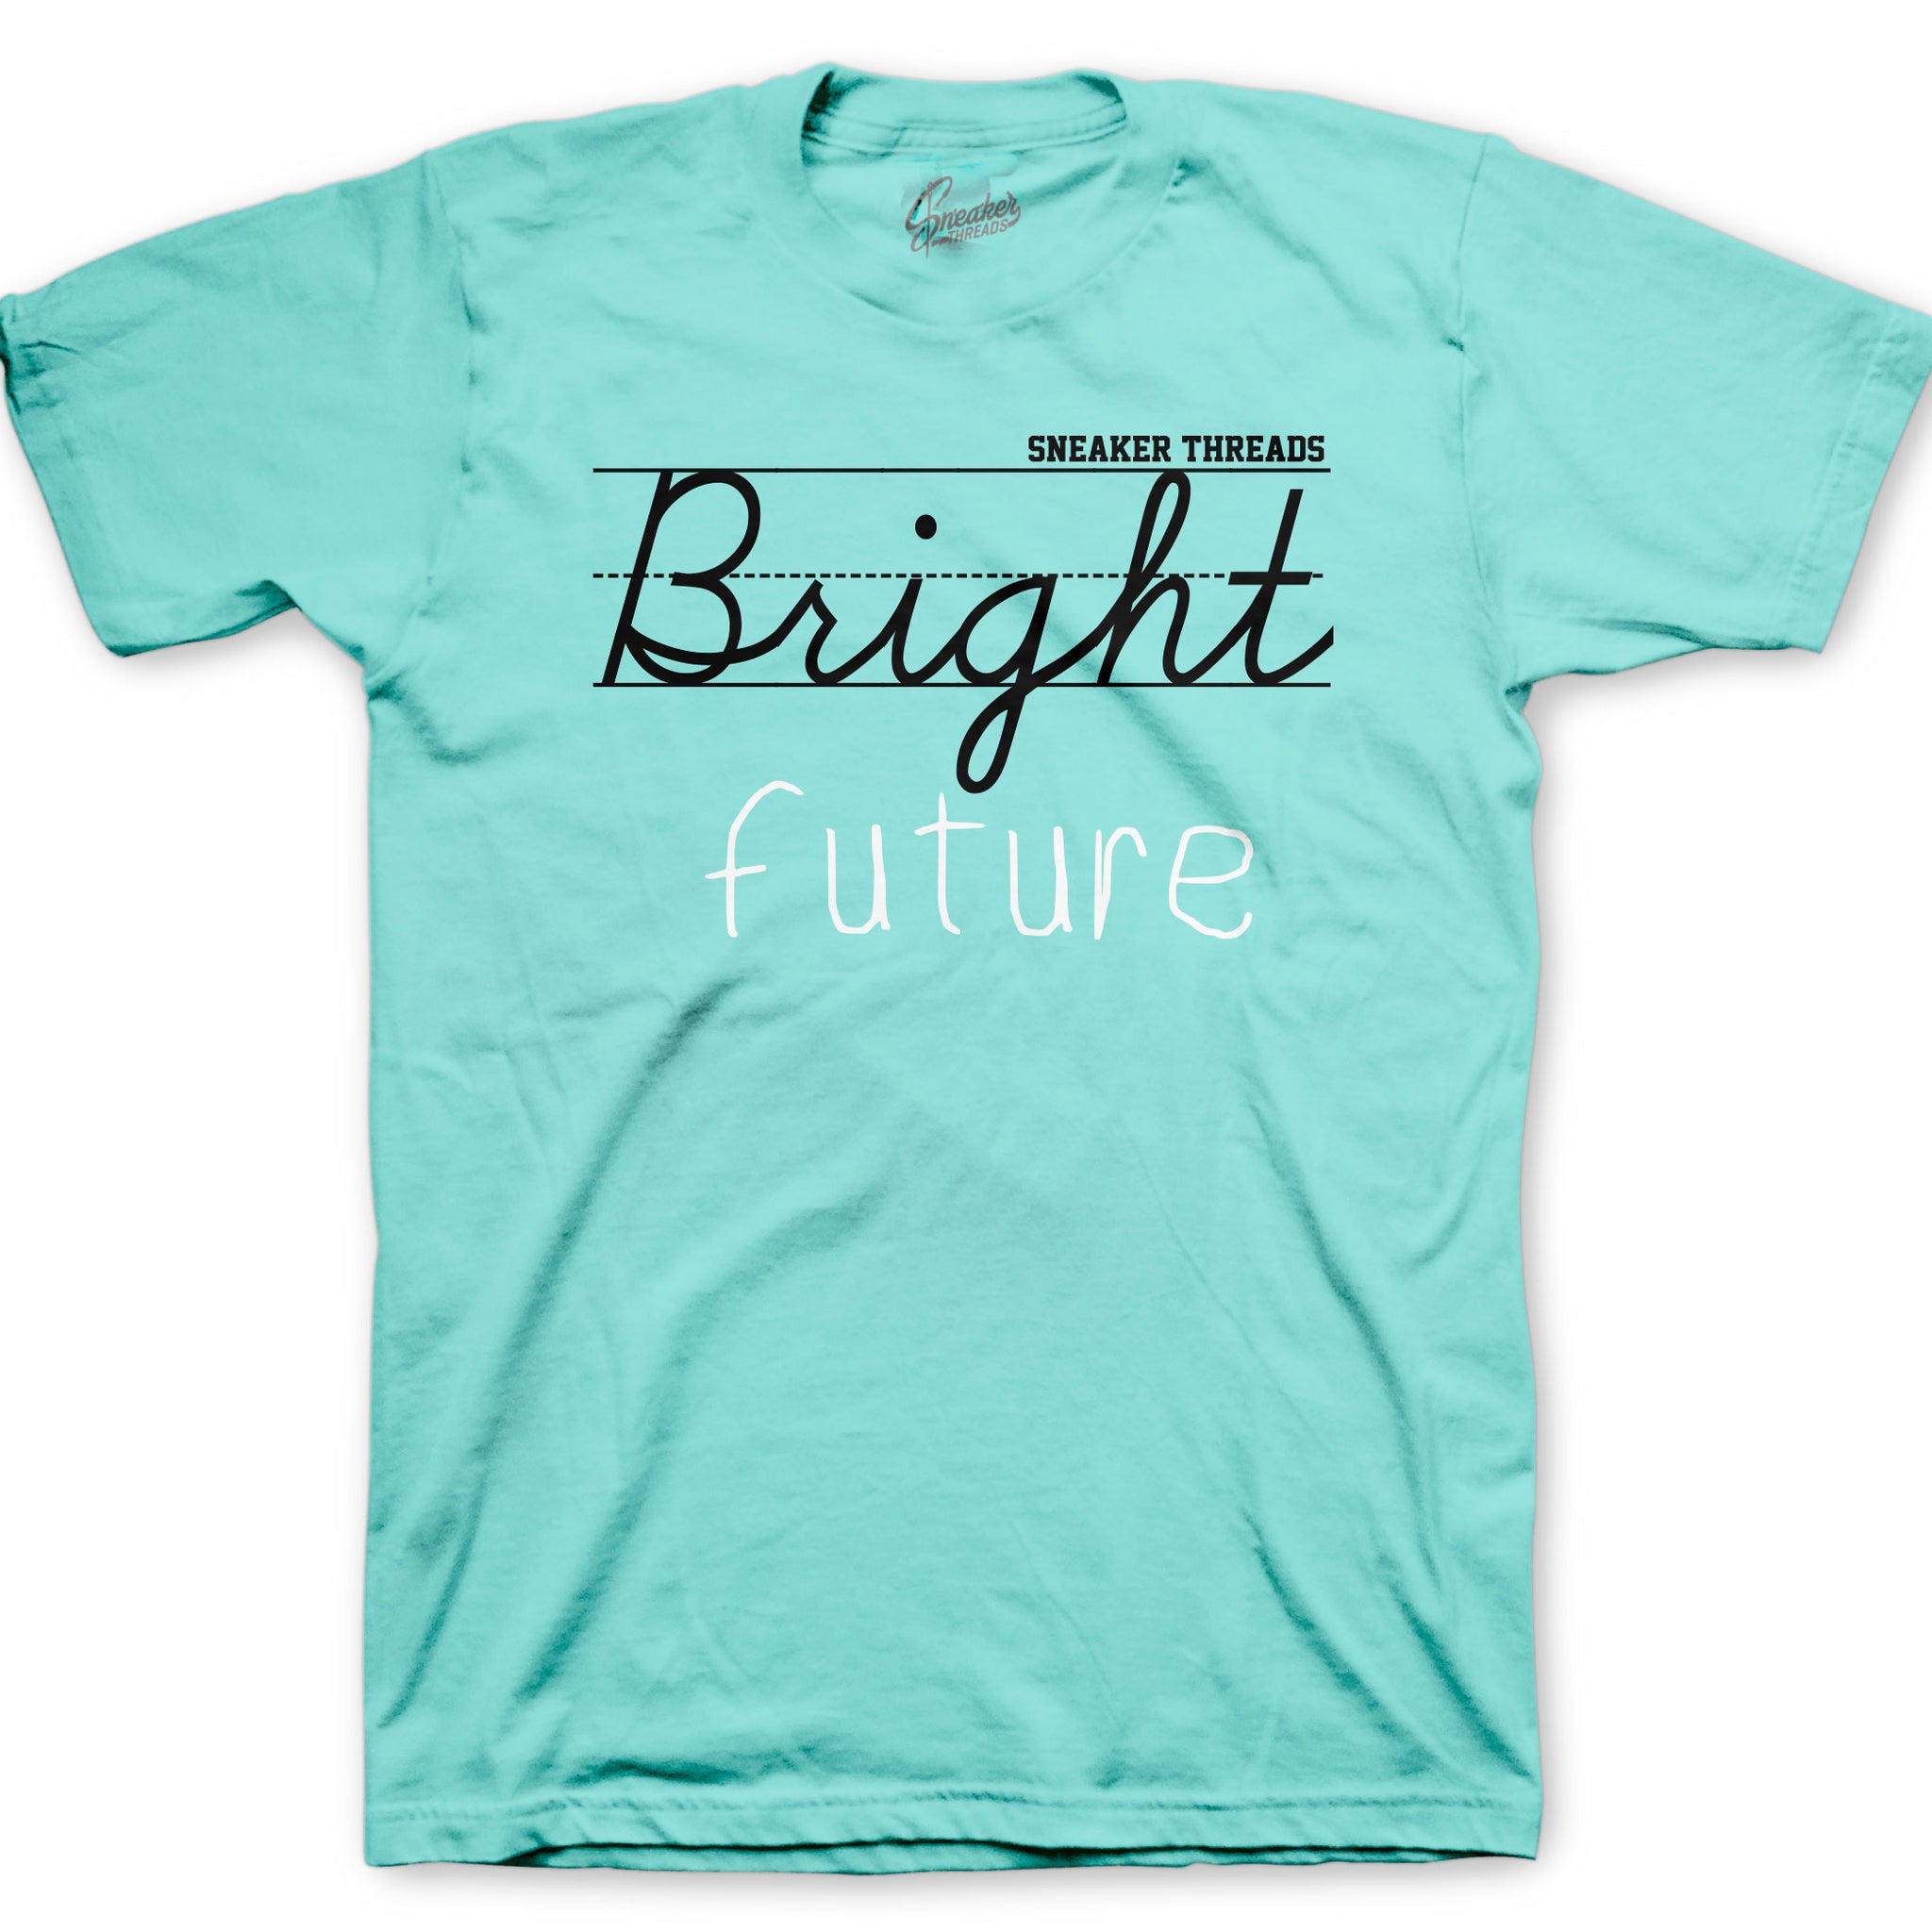 Retro 5 Island Green Shirt - Bright Future - Mint